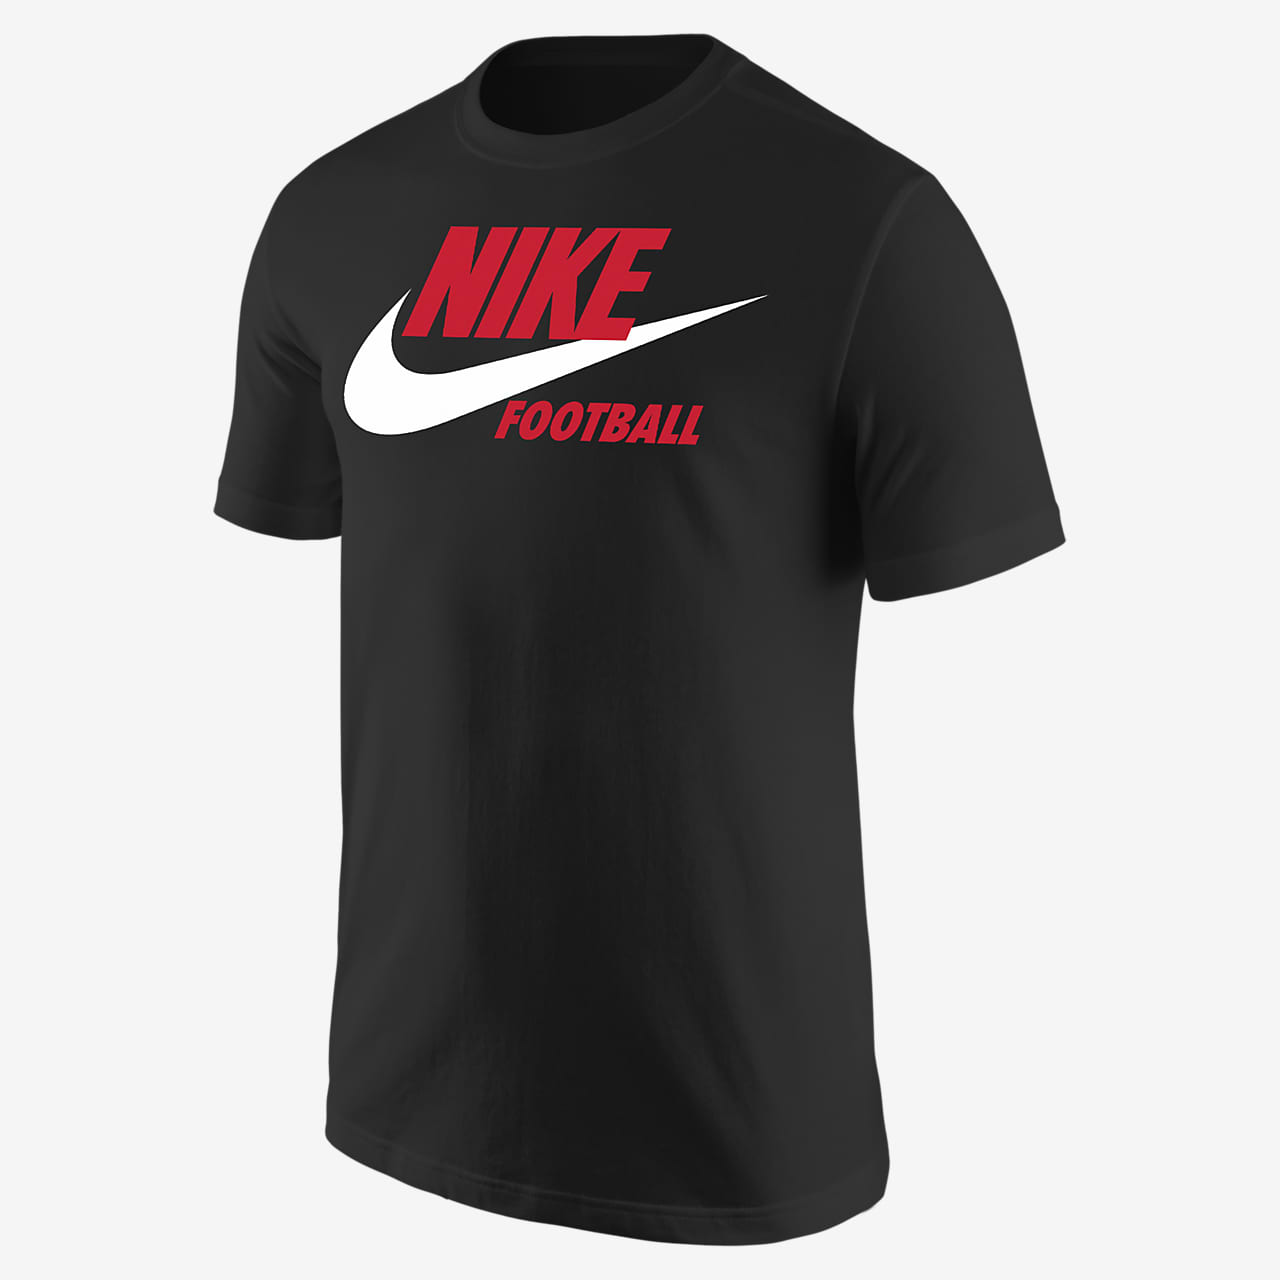 Nike Swoosh T-Shirt.